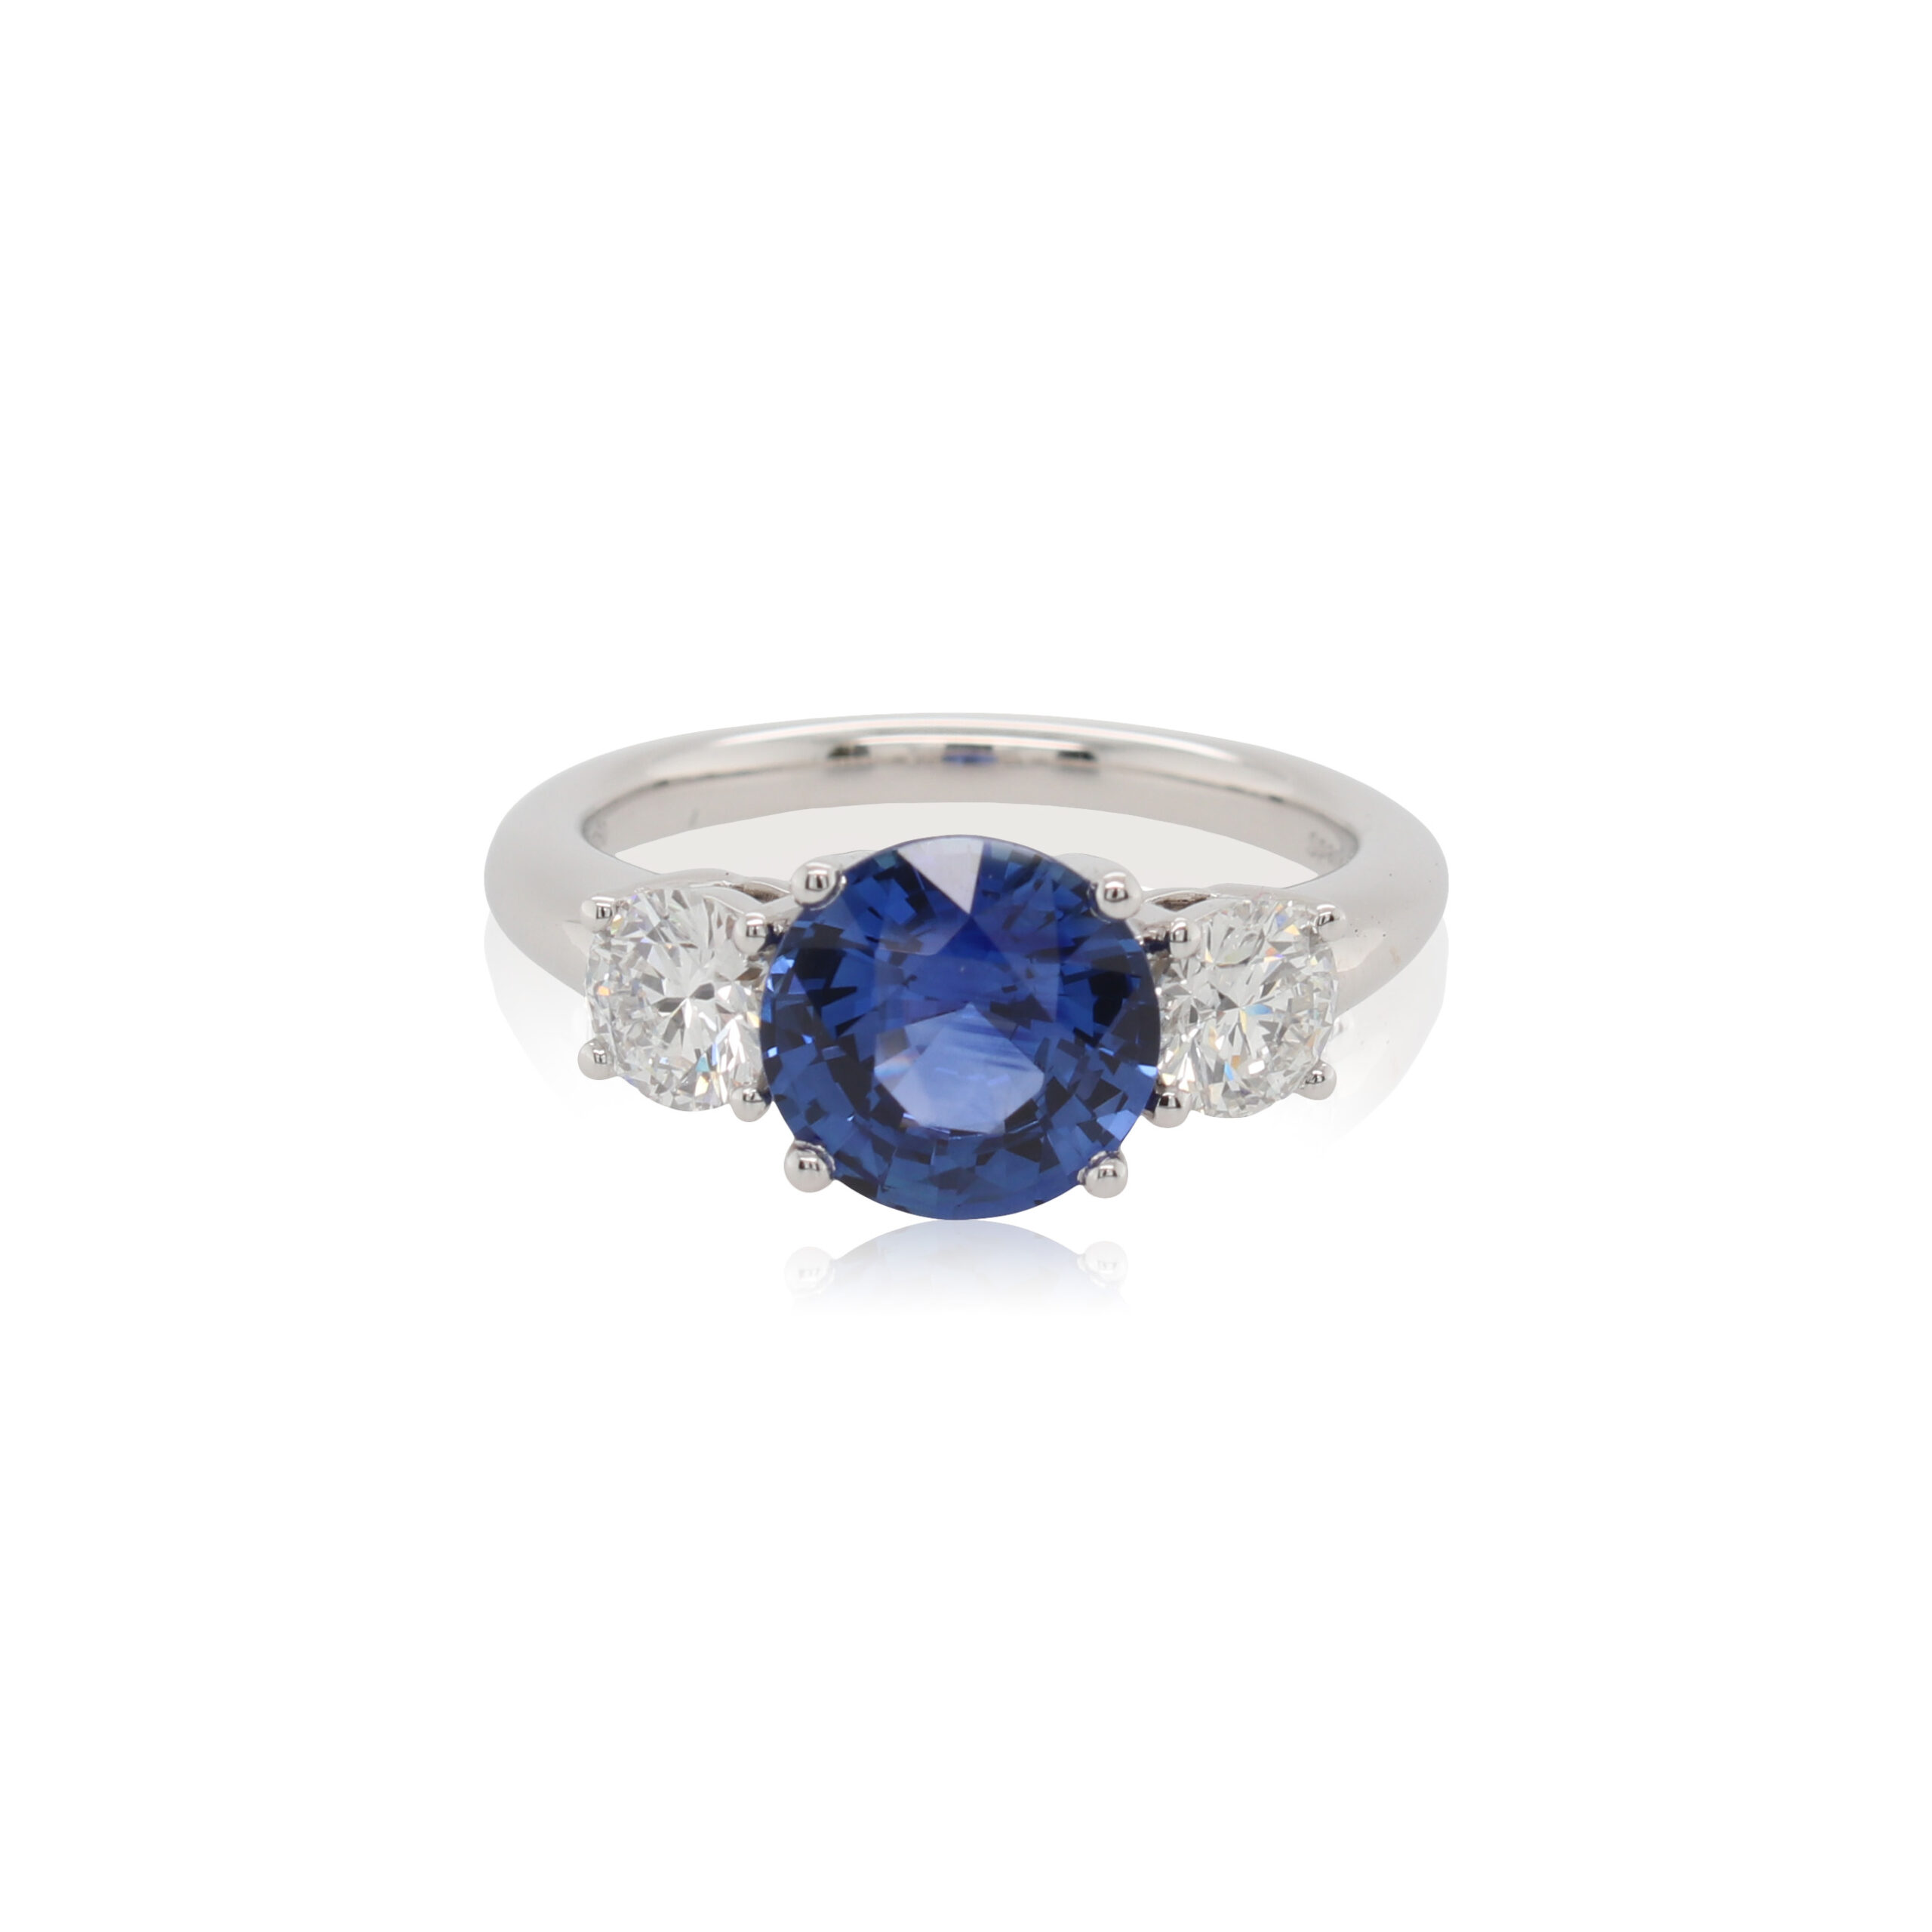 040871Sapphire and Diamond Three Stone Ring.jpg